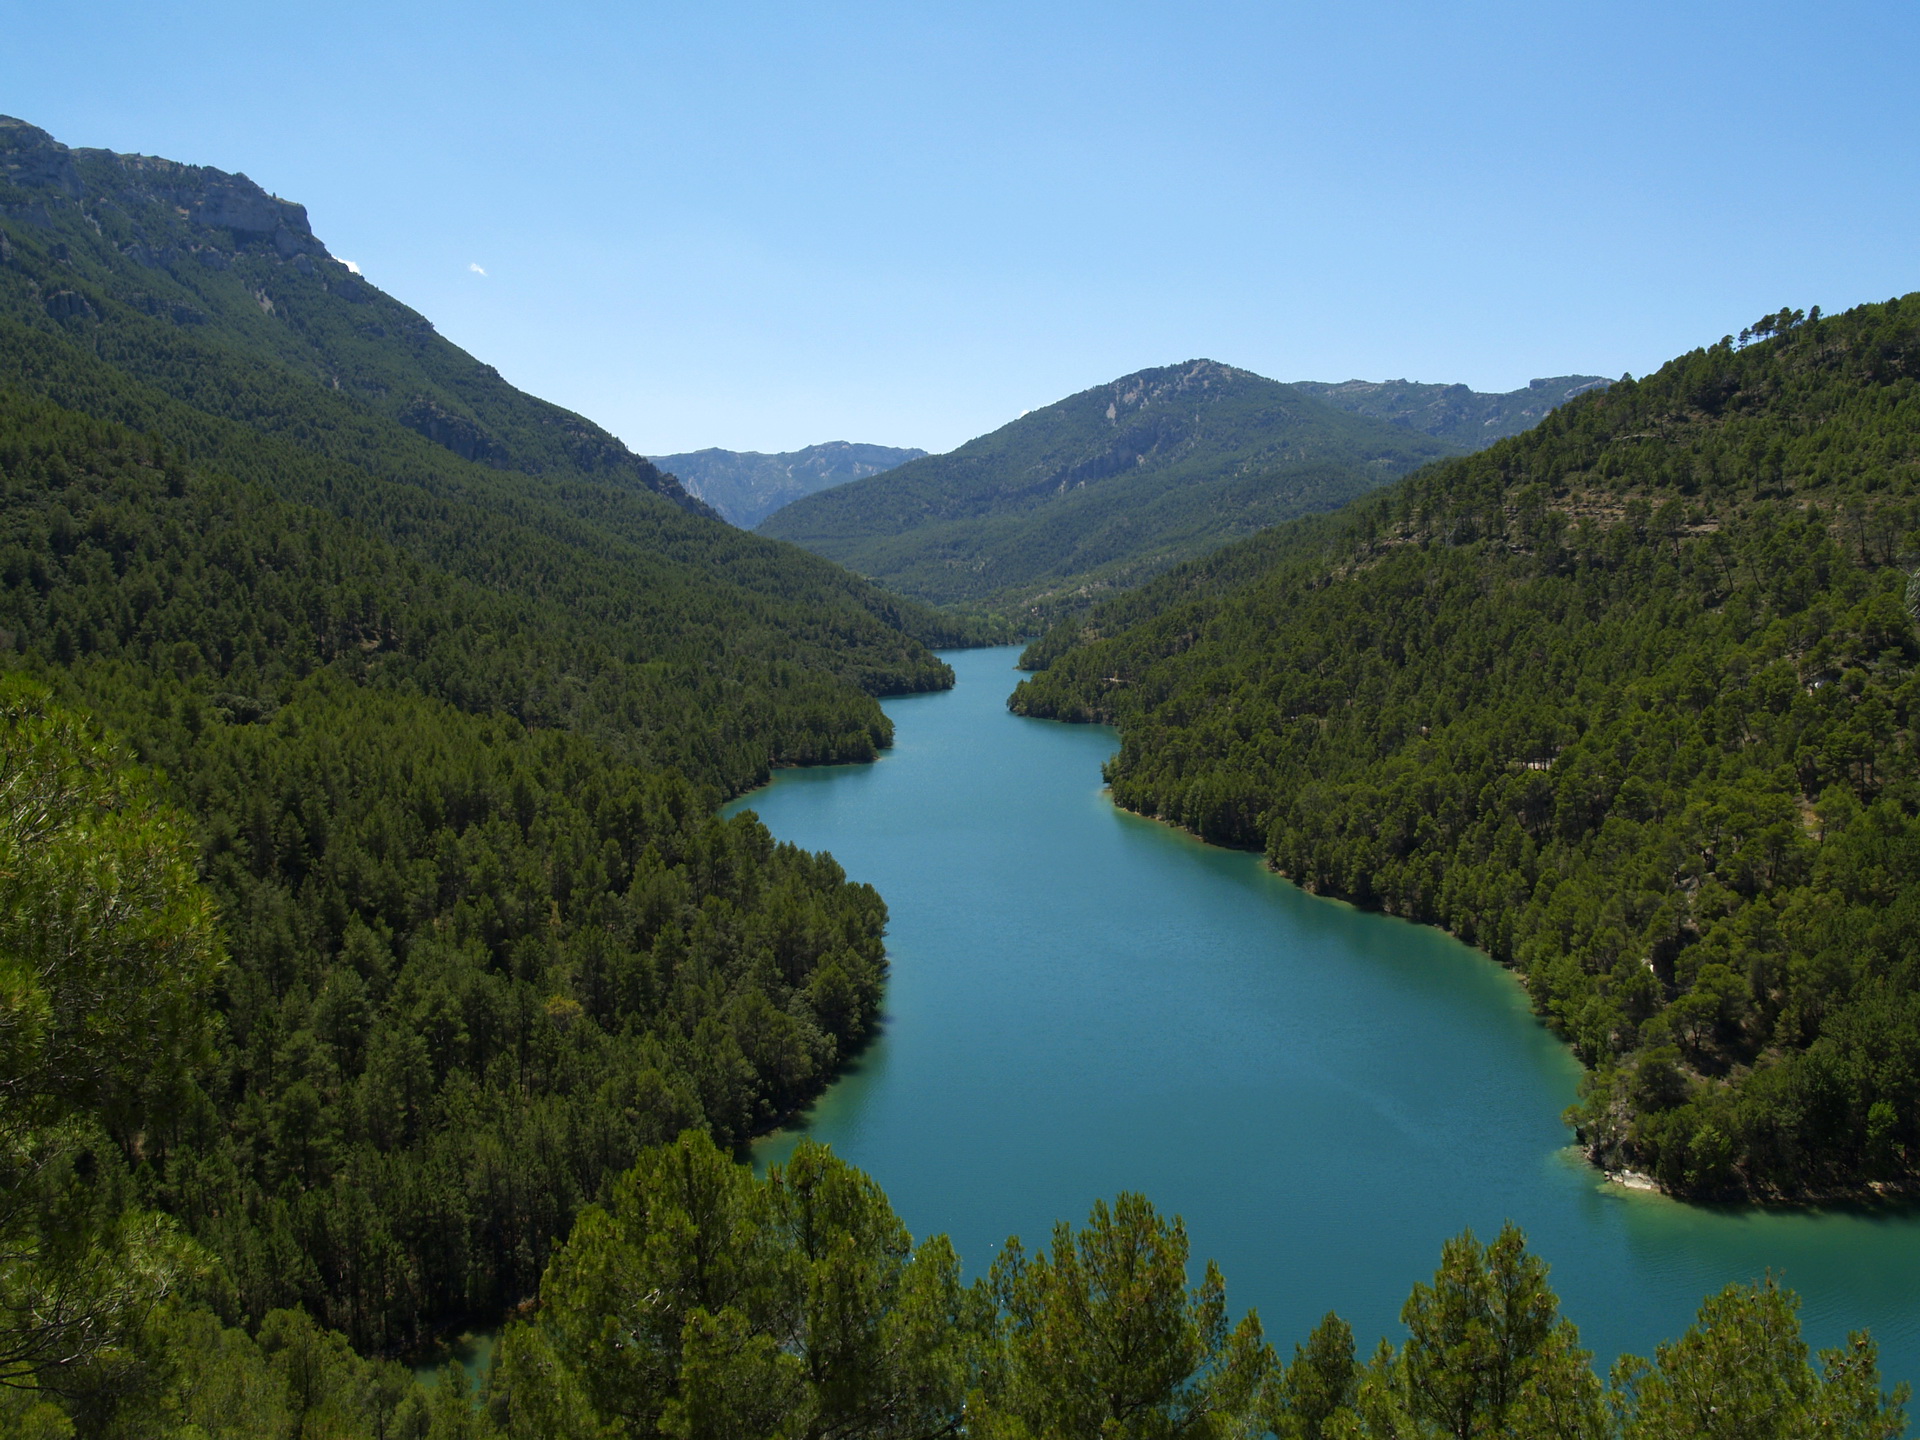 Картинки рек и озер. Озеро Рица. Полноводные реки Испании. Реки и озера Испании. Озеро Тахо Испания.